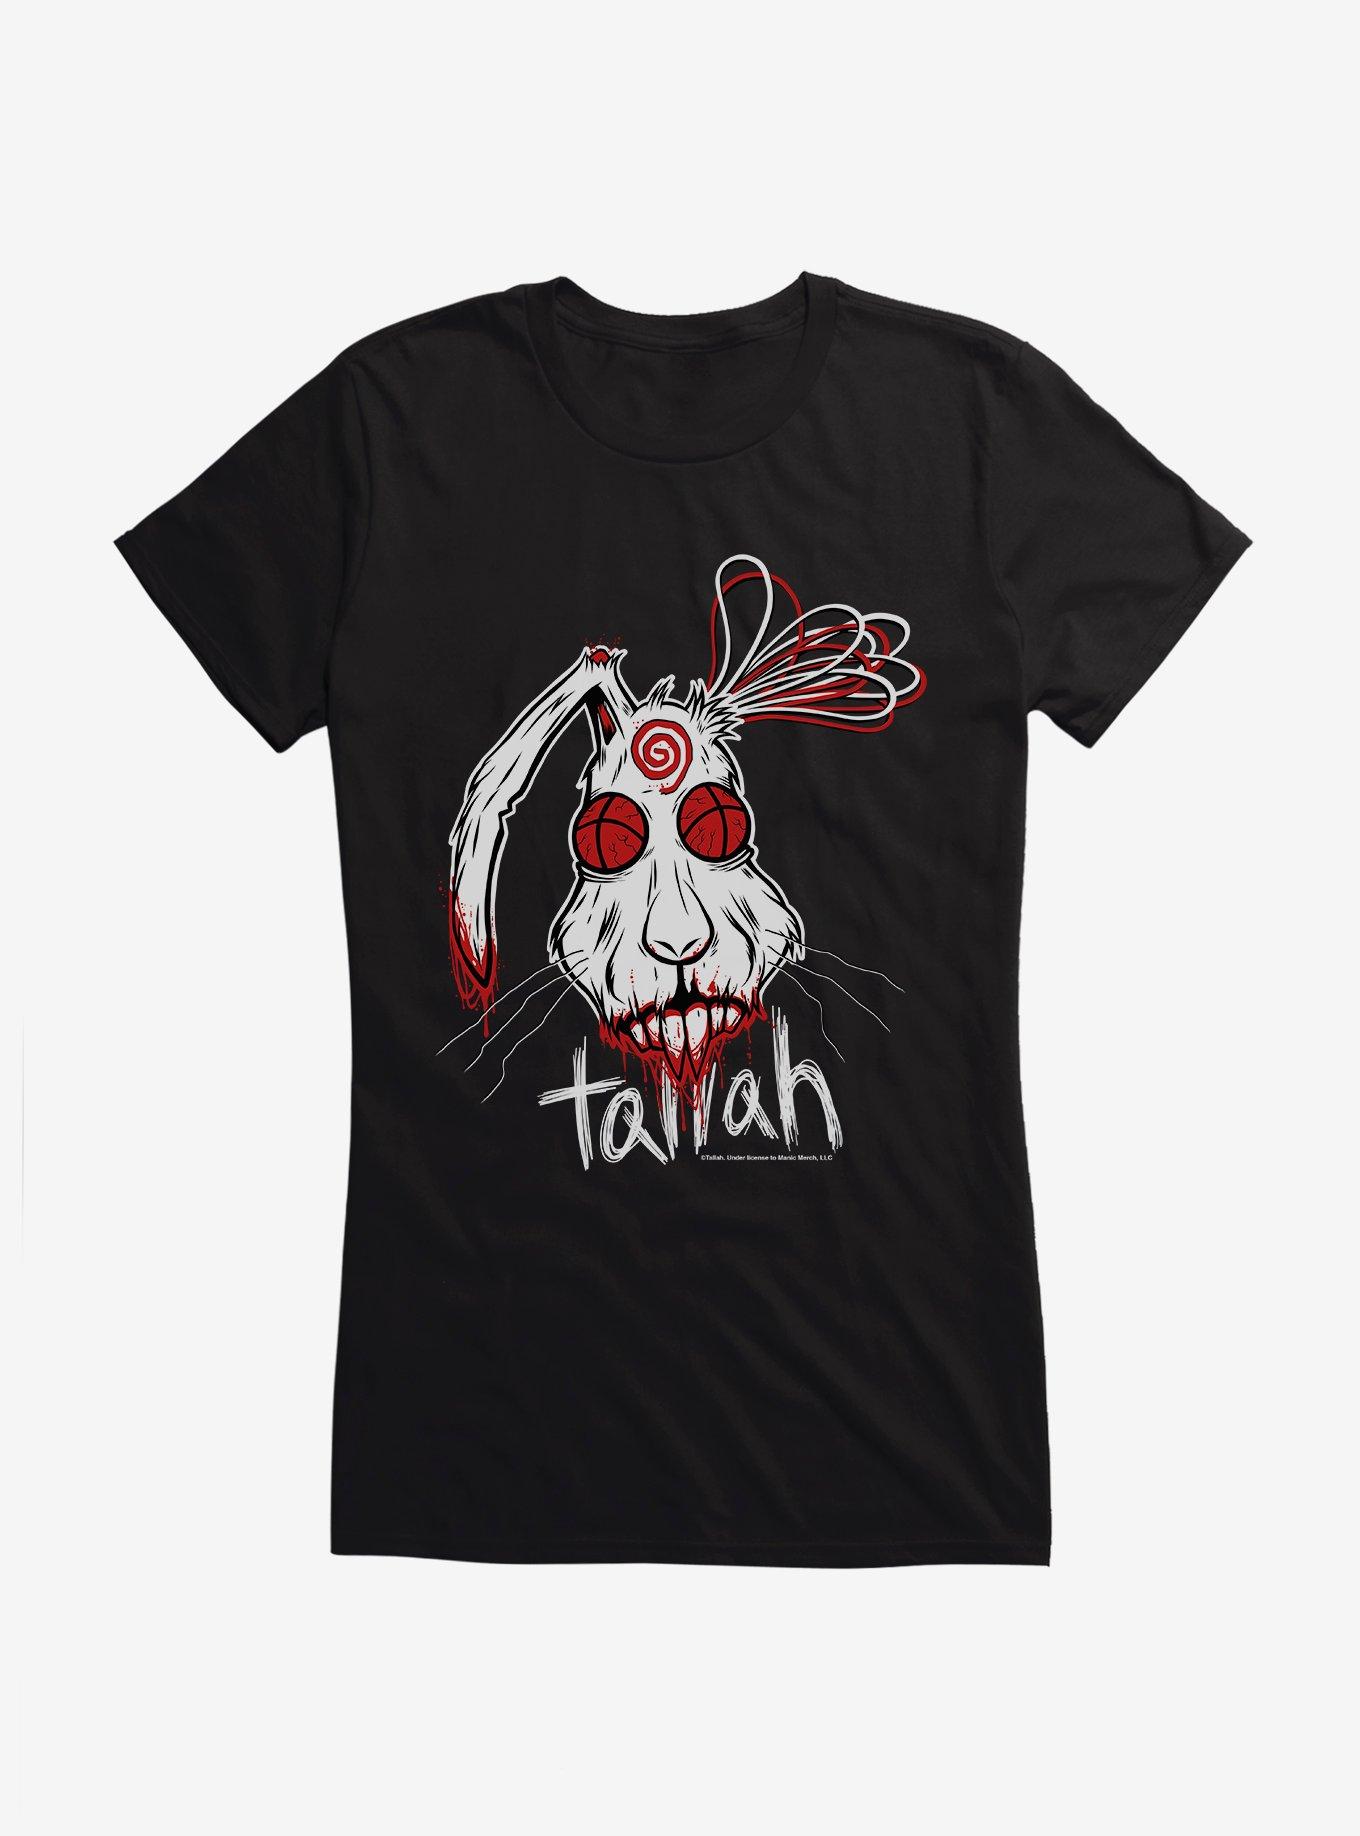 Tallah Dead Rabbit Girls T-Shirt, BLACK, hi-res